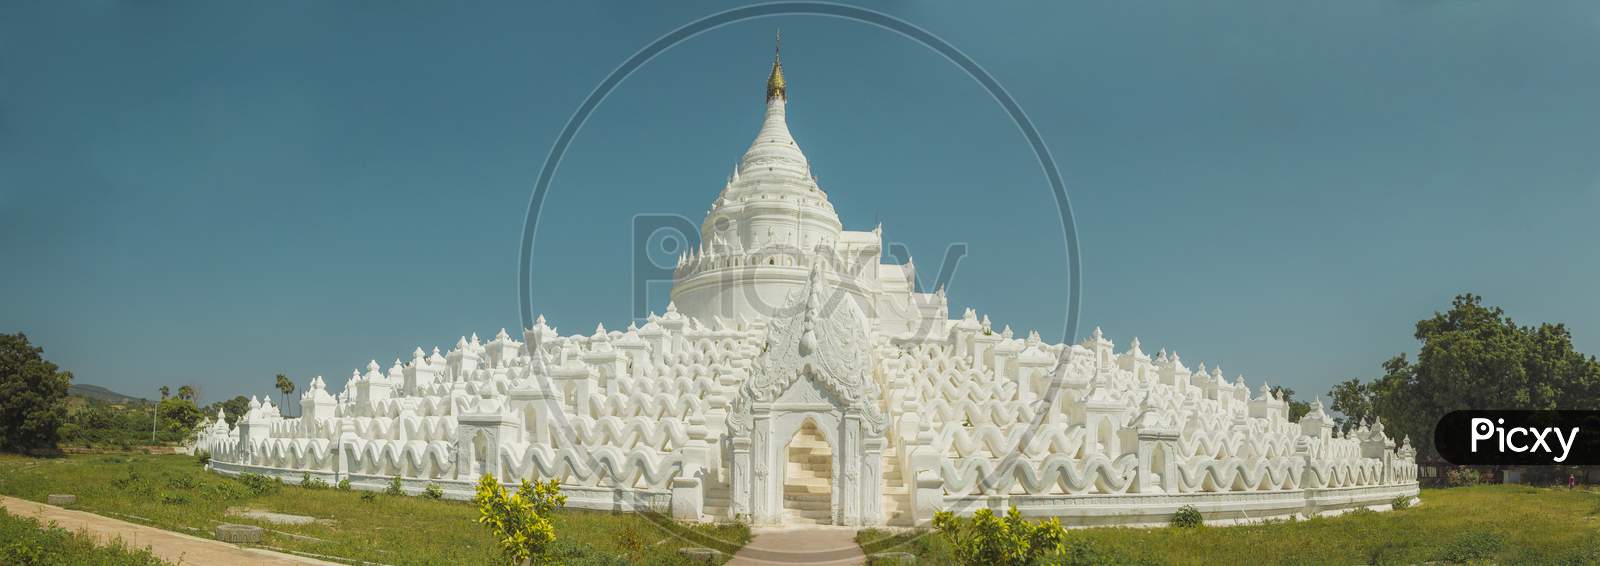 White Pagoda(MyaTheinThan)